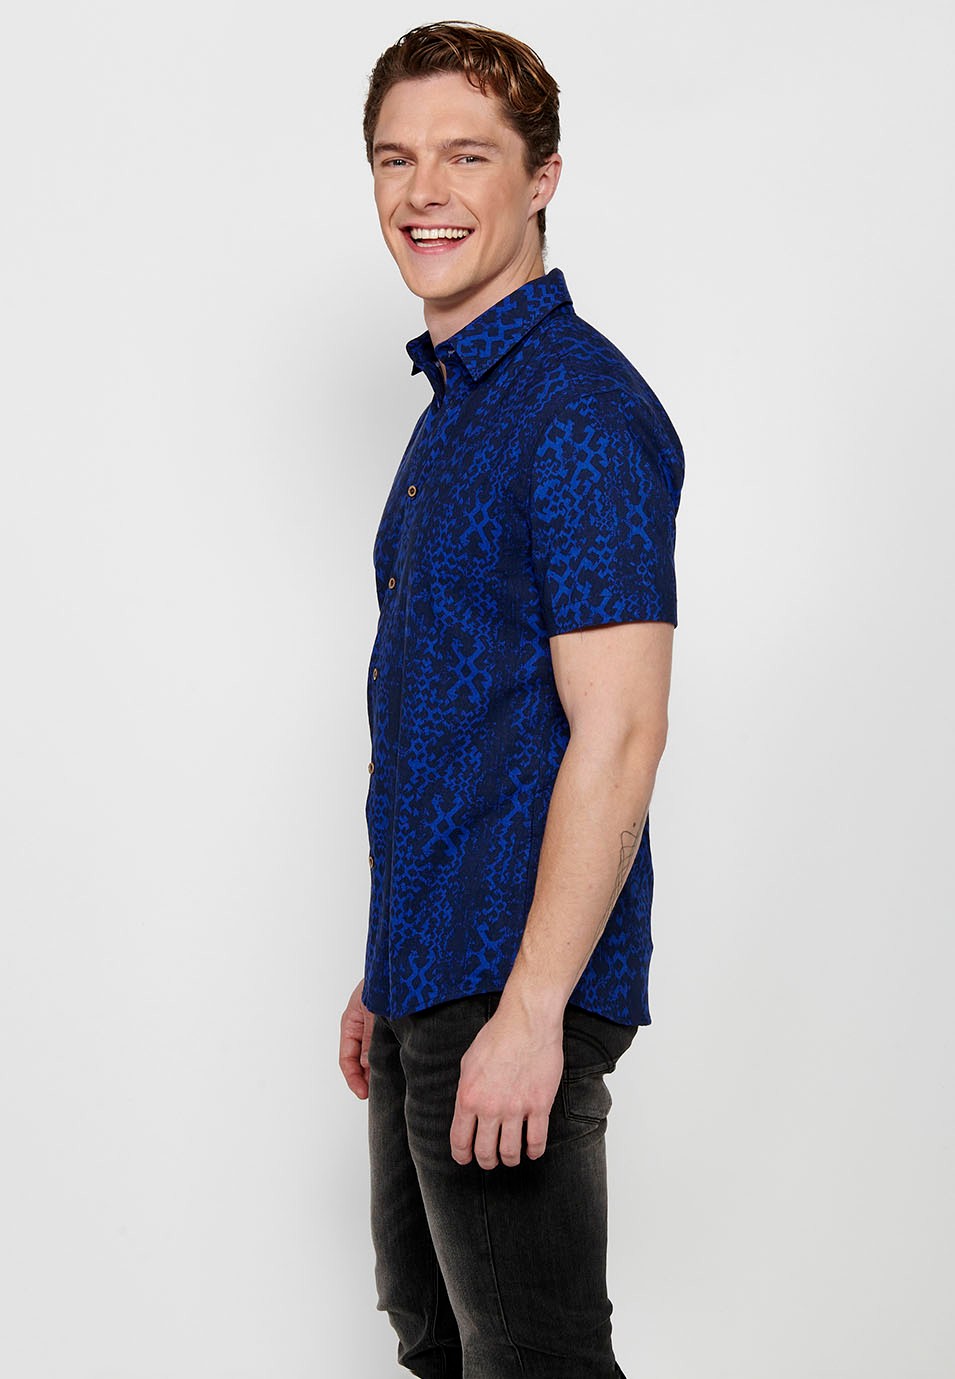 Men's Blue Color Button Front Closure Short Sleeve Printed Shirt